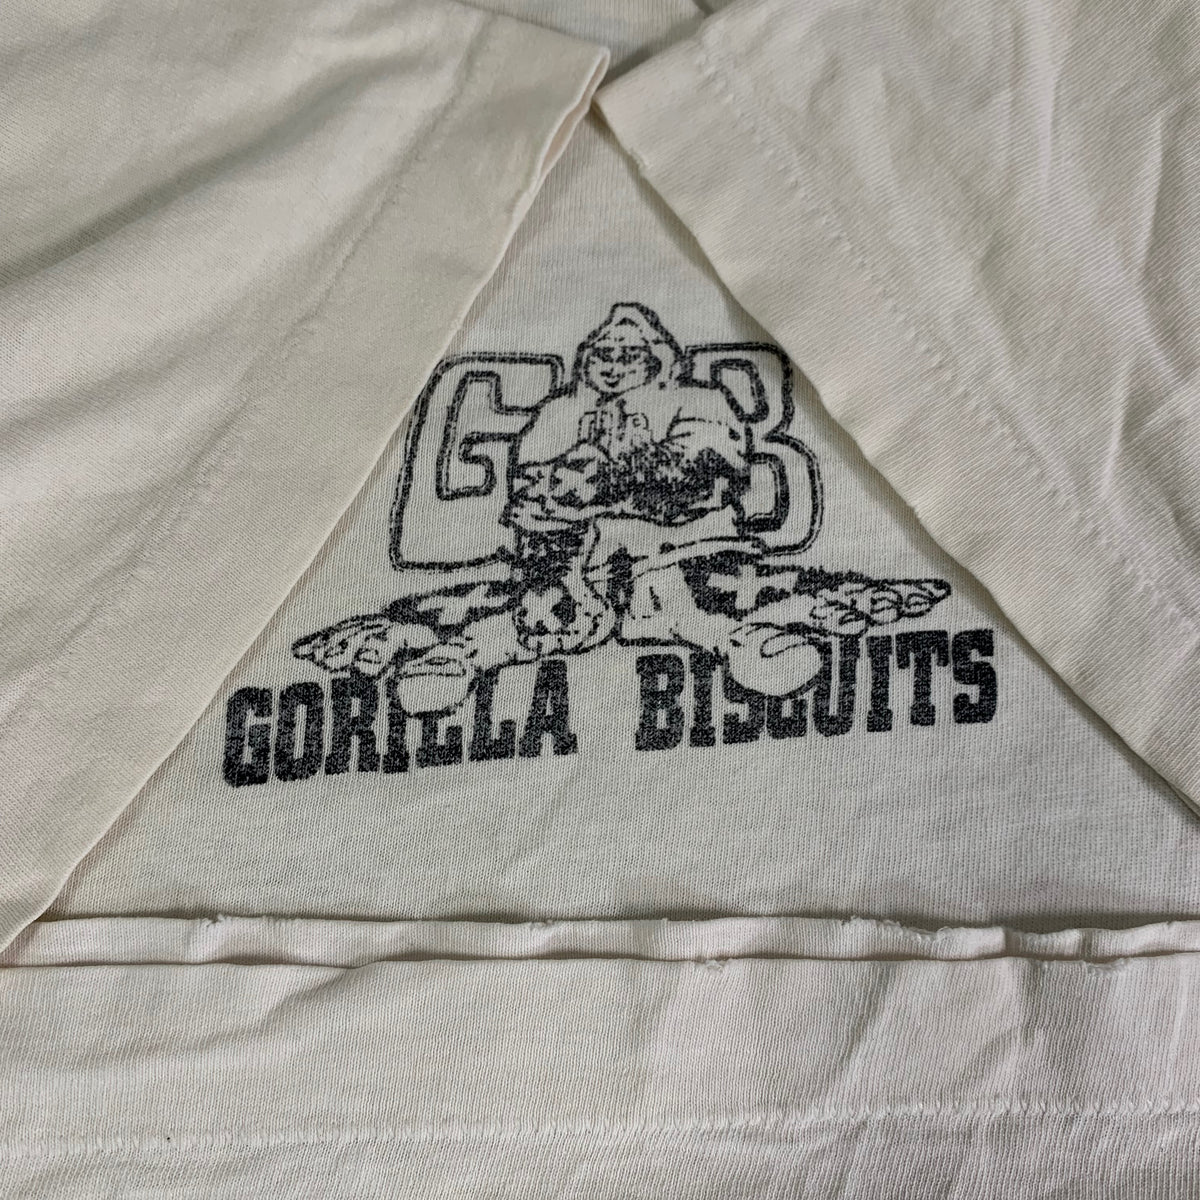 Vintage Gorilla Biscuits 